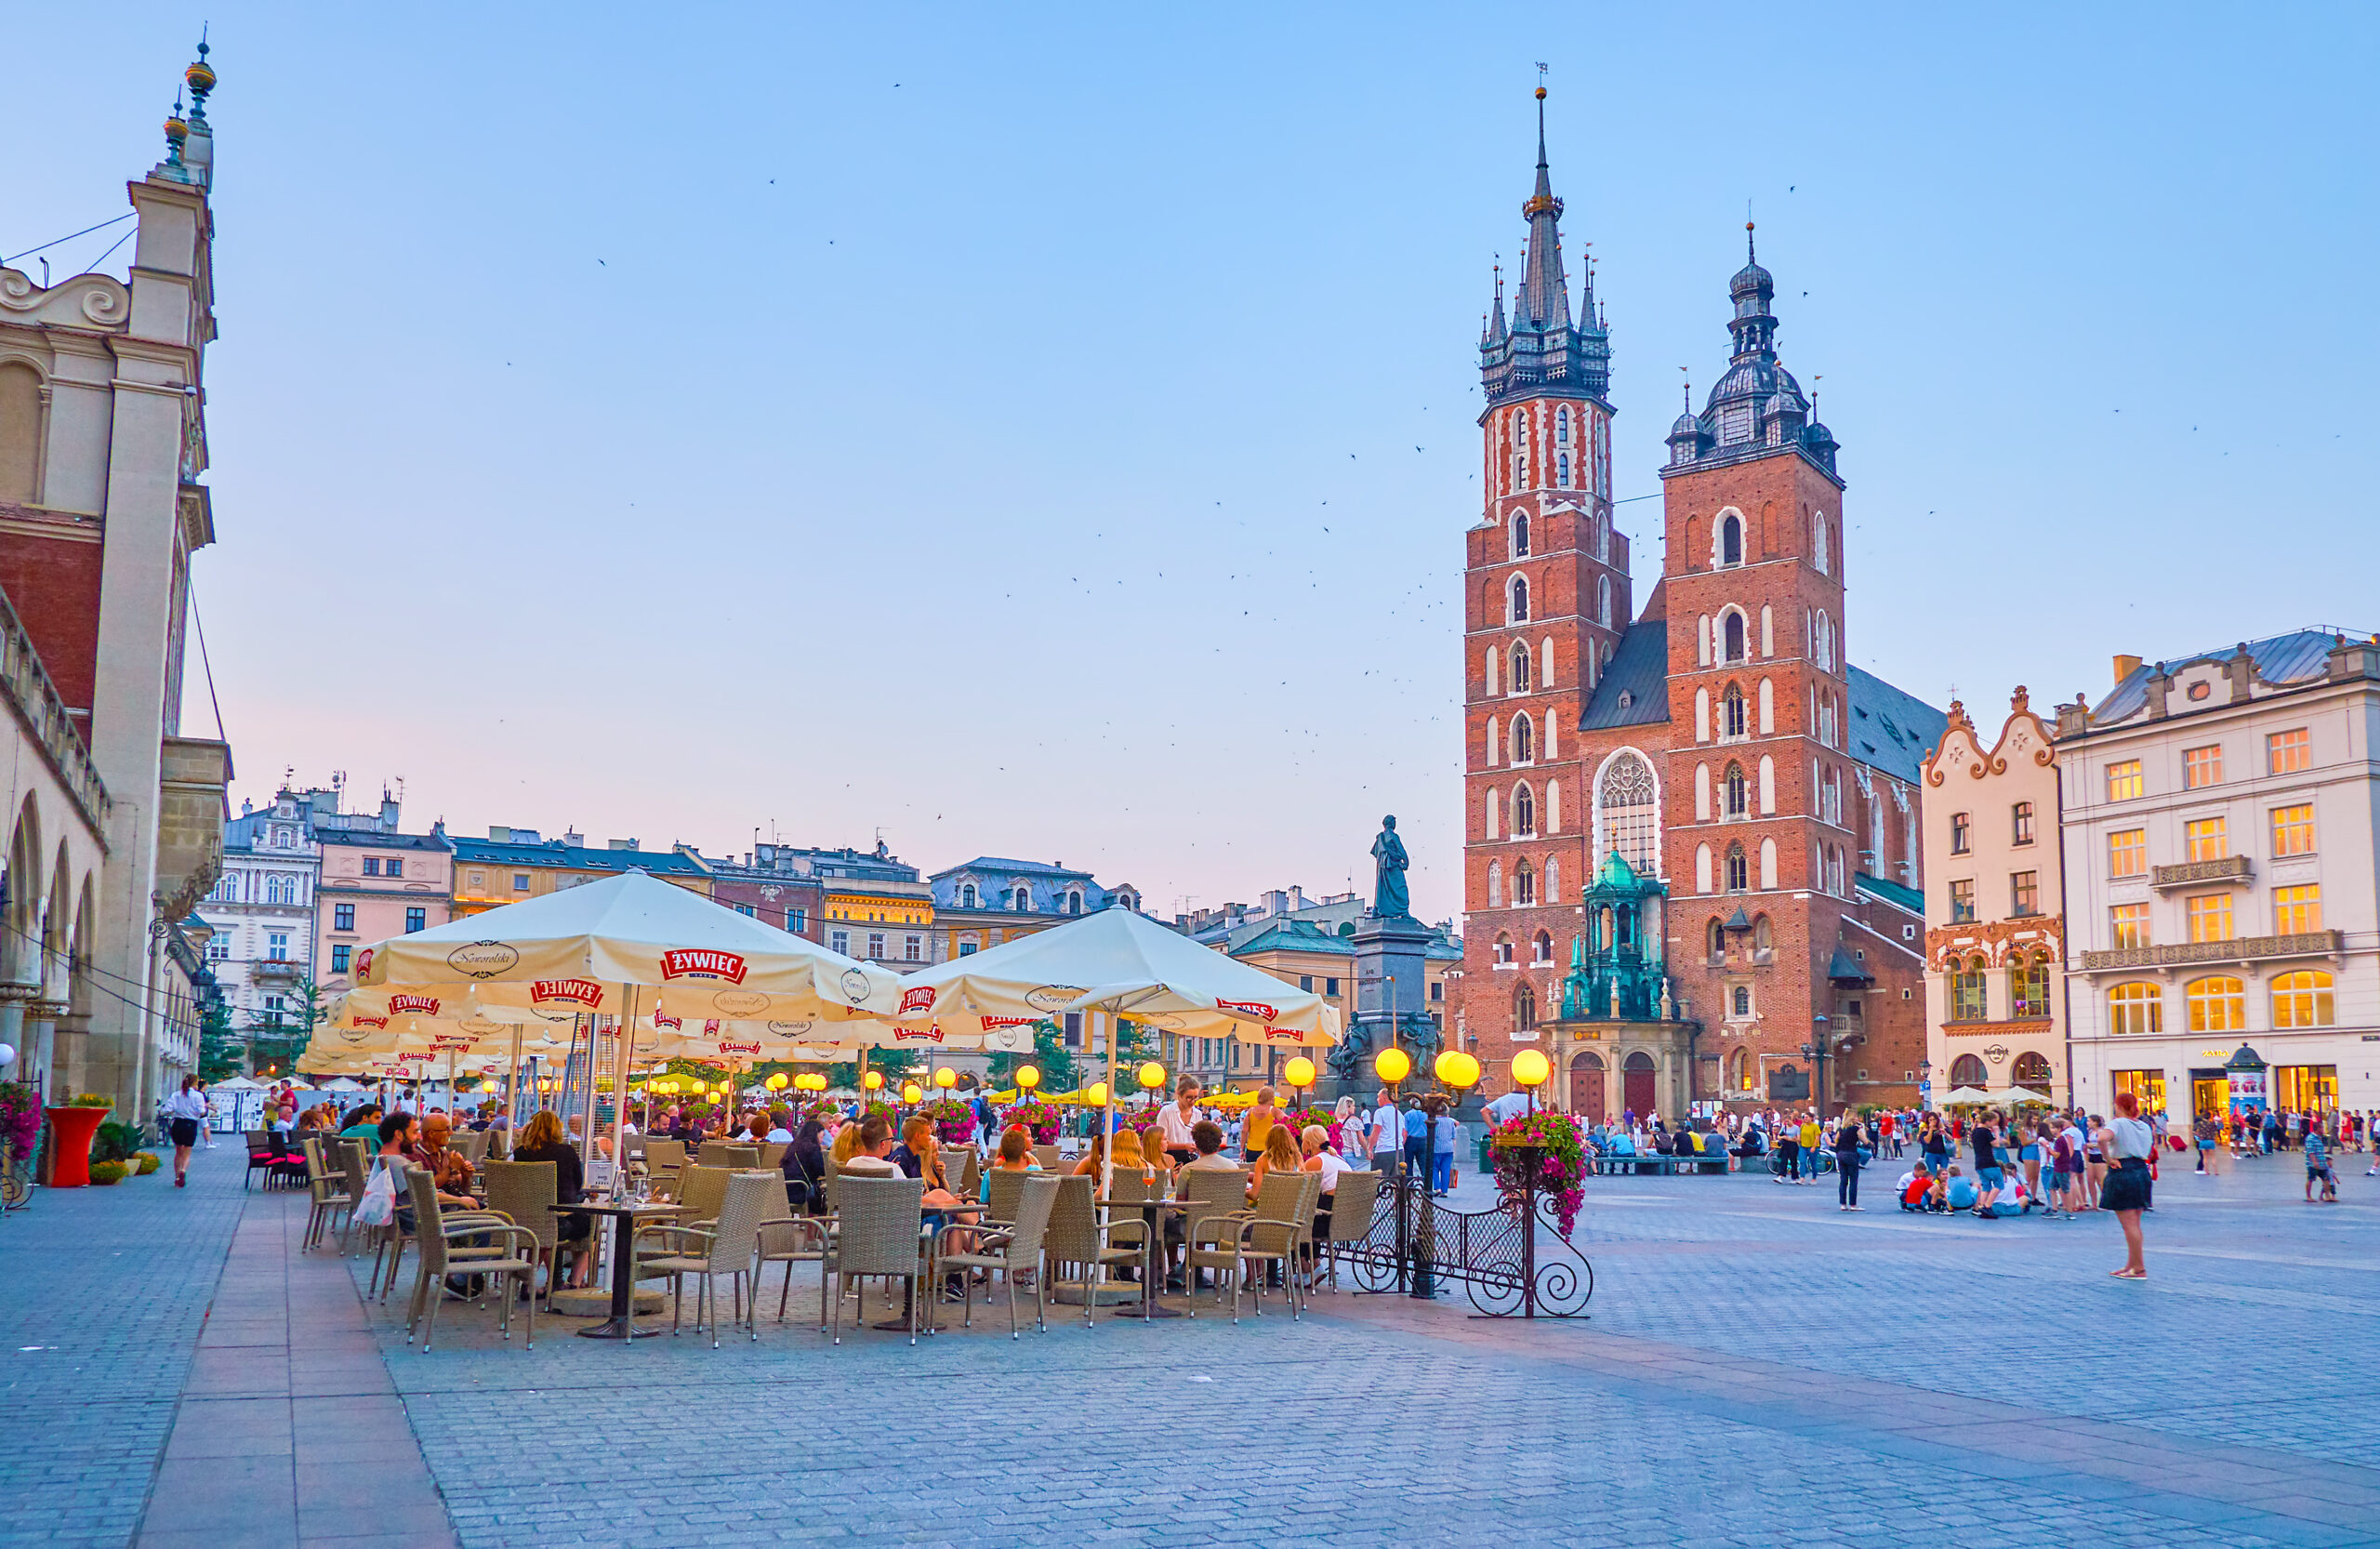 Krakow Old Town in Poland